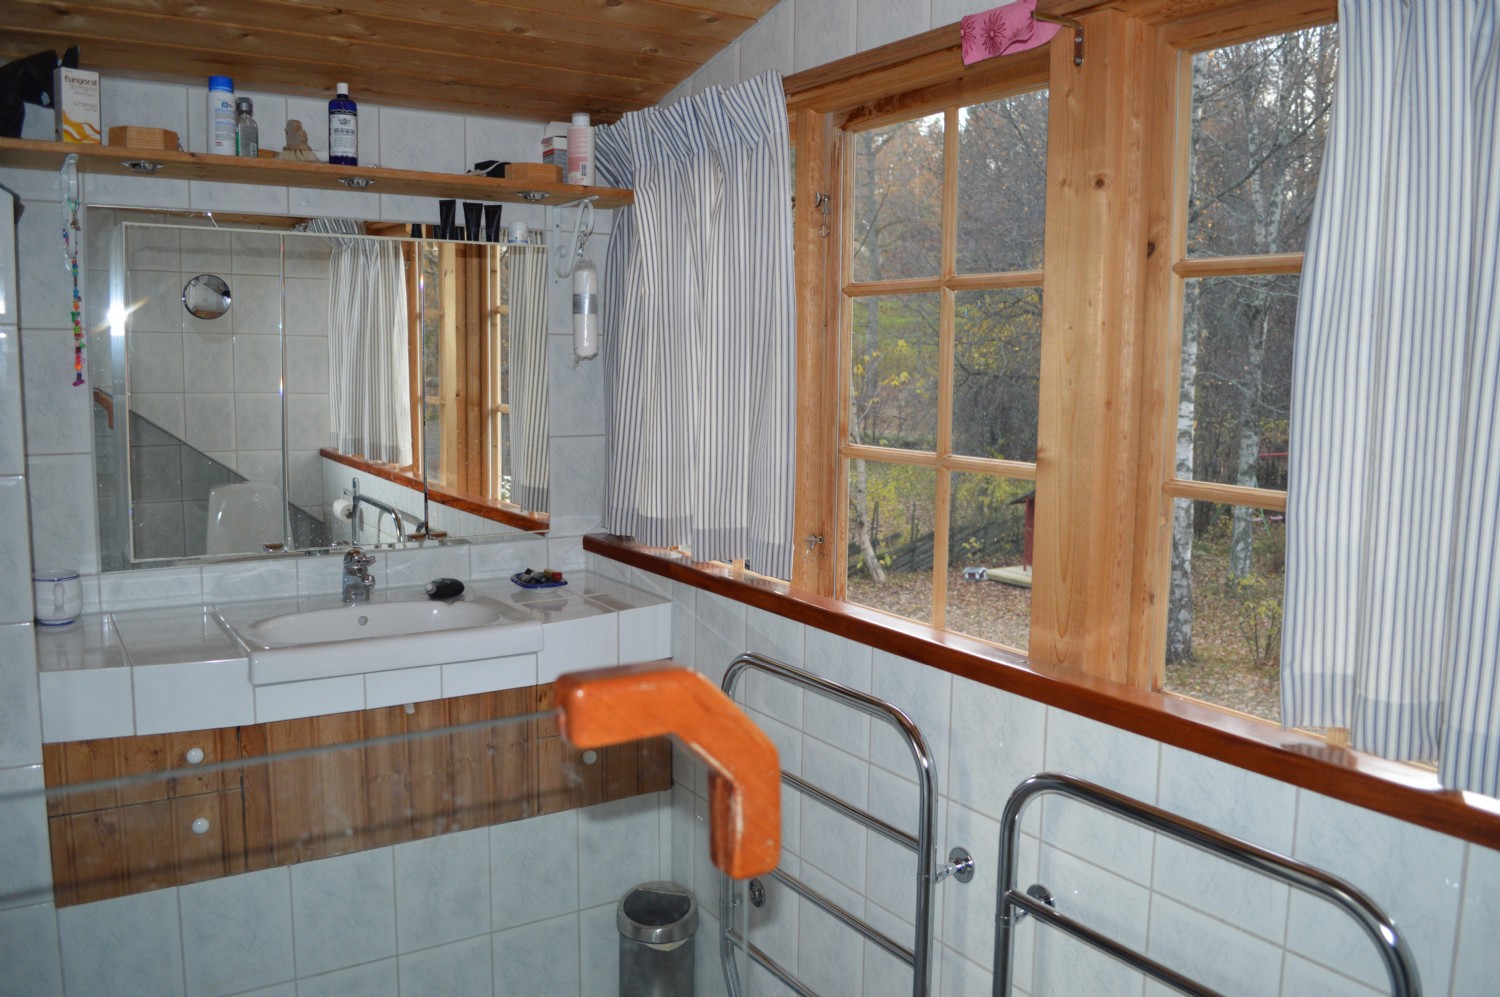 Ö.V. Badrum/ Bath room upper floor 